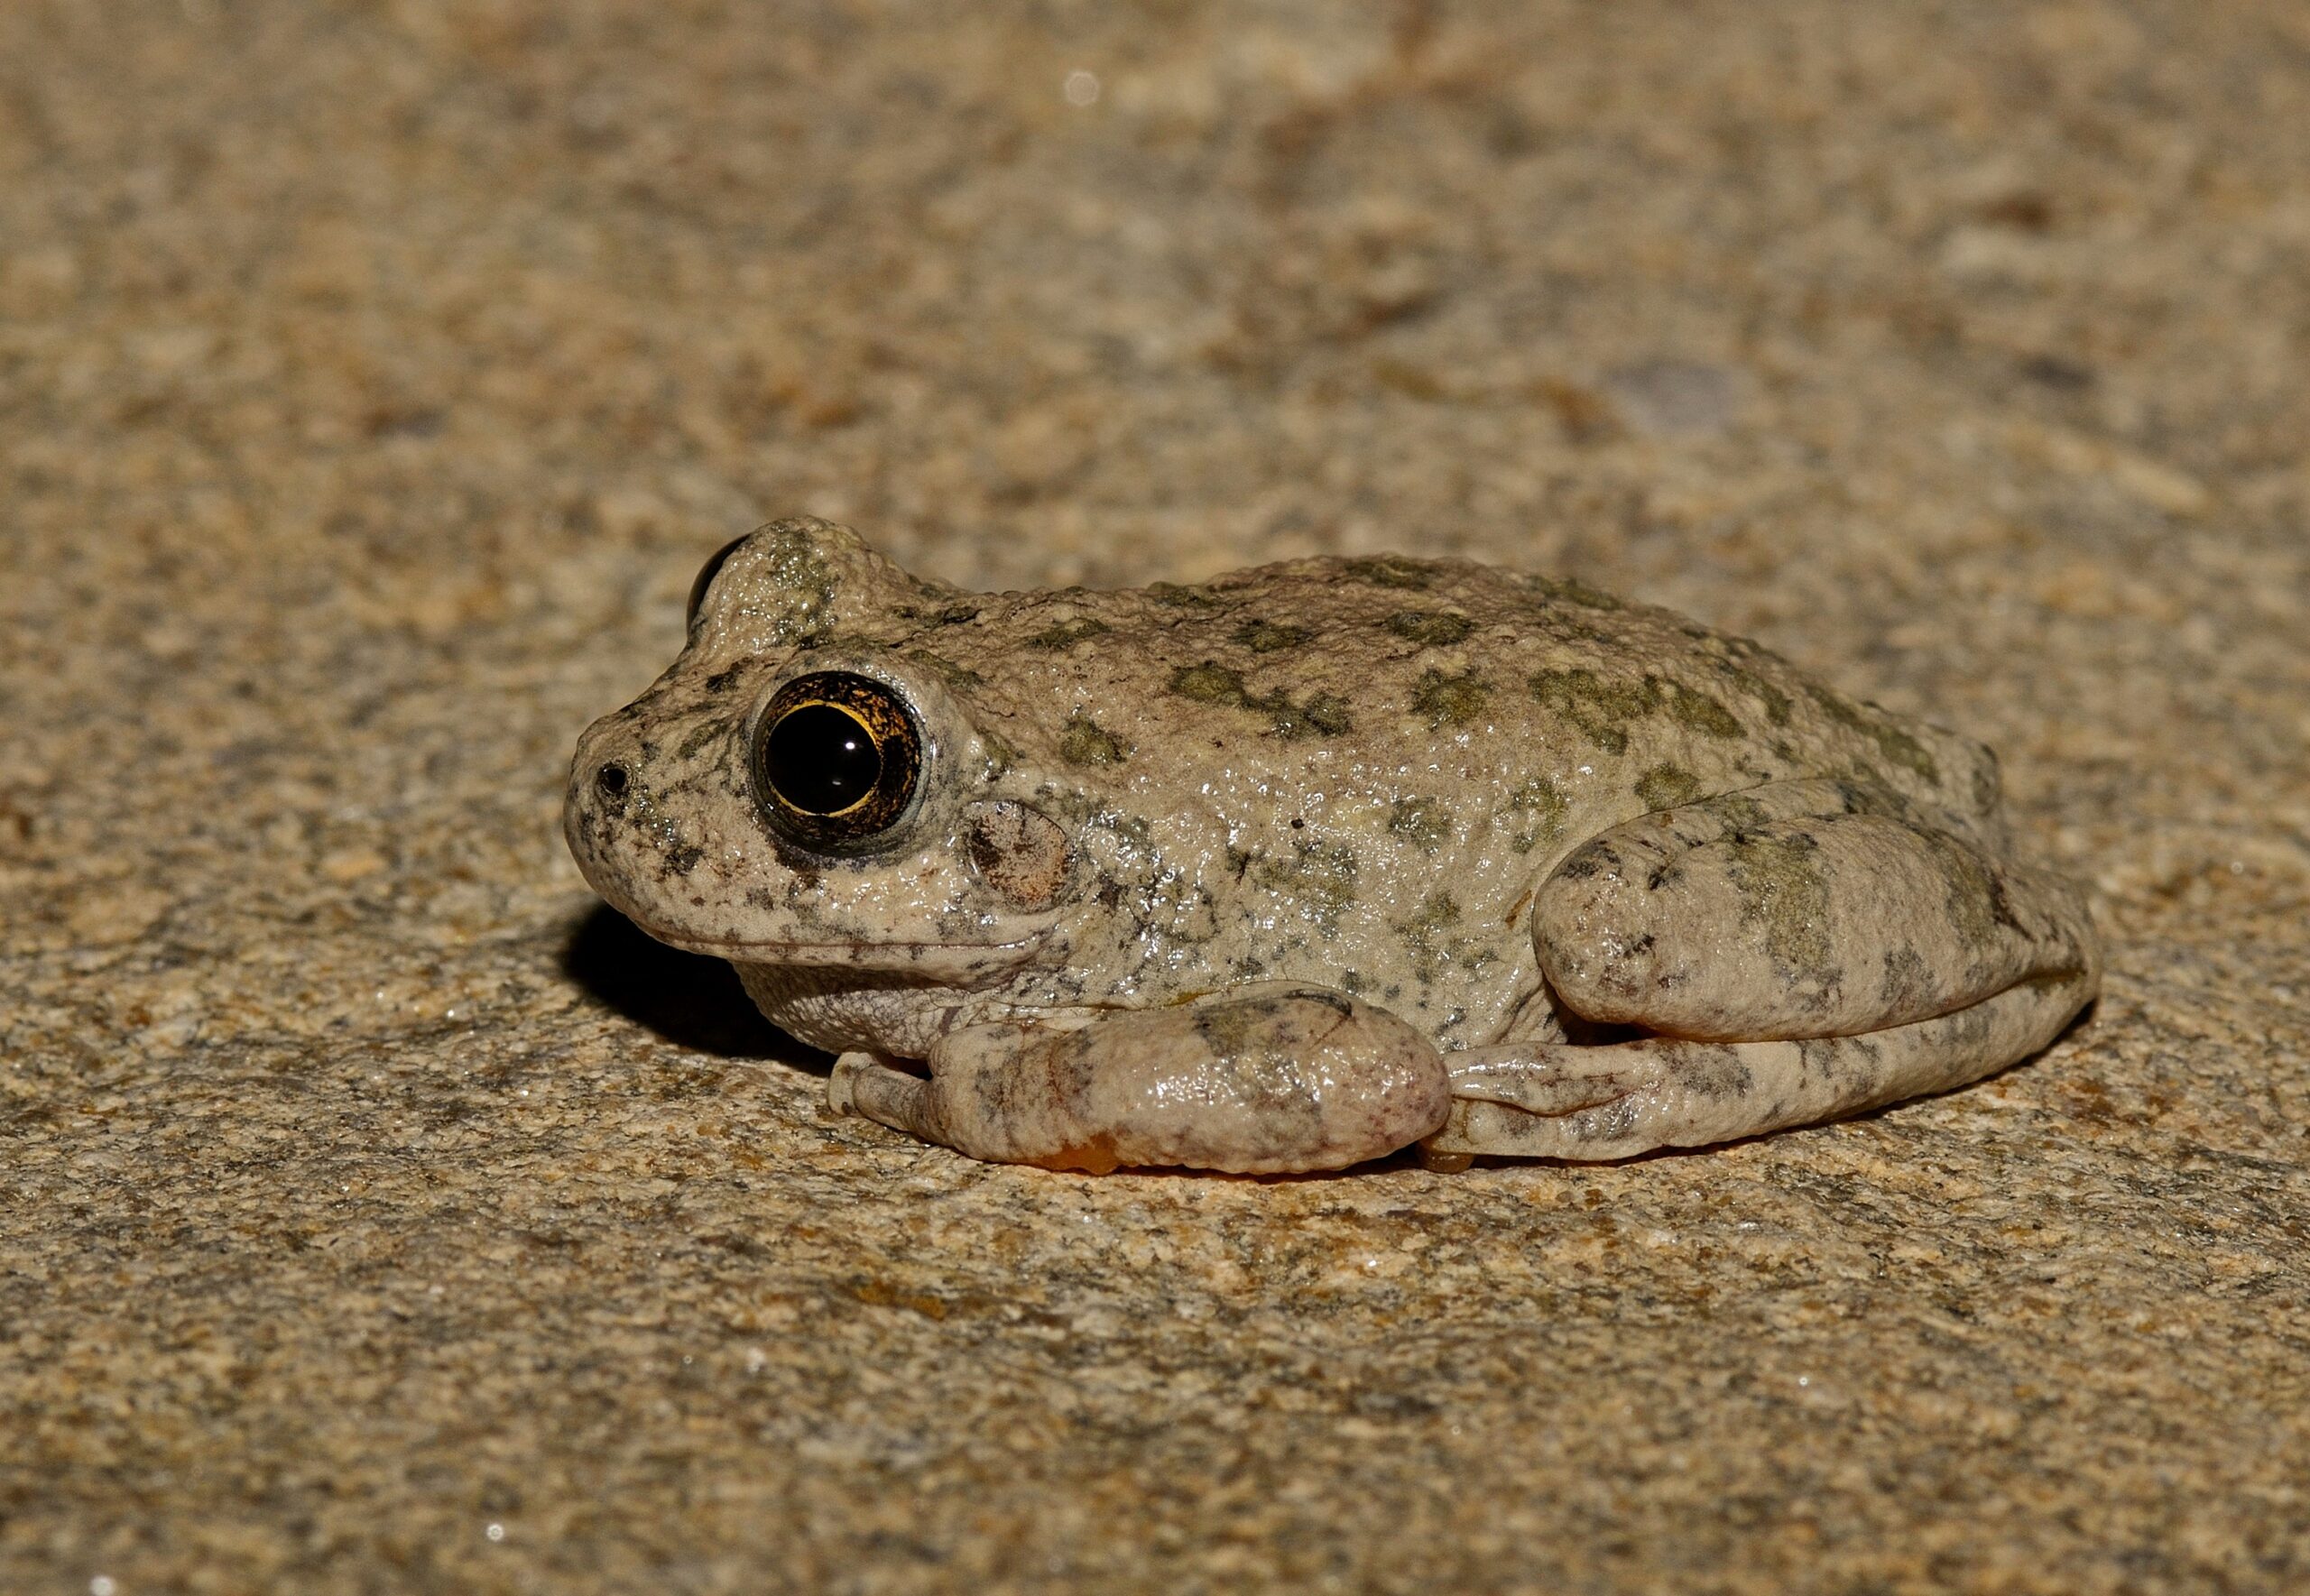 <i/>Canyon Tree Frog</i><br>
<small> By: Rick Fridell</small>
